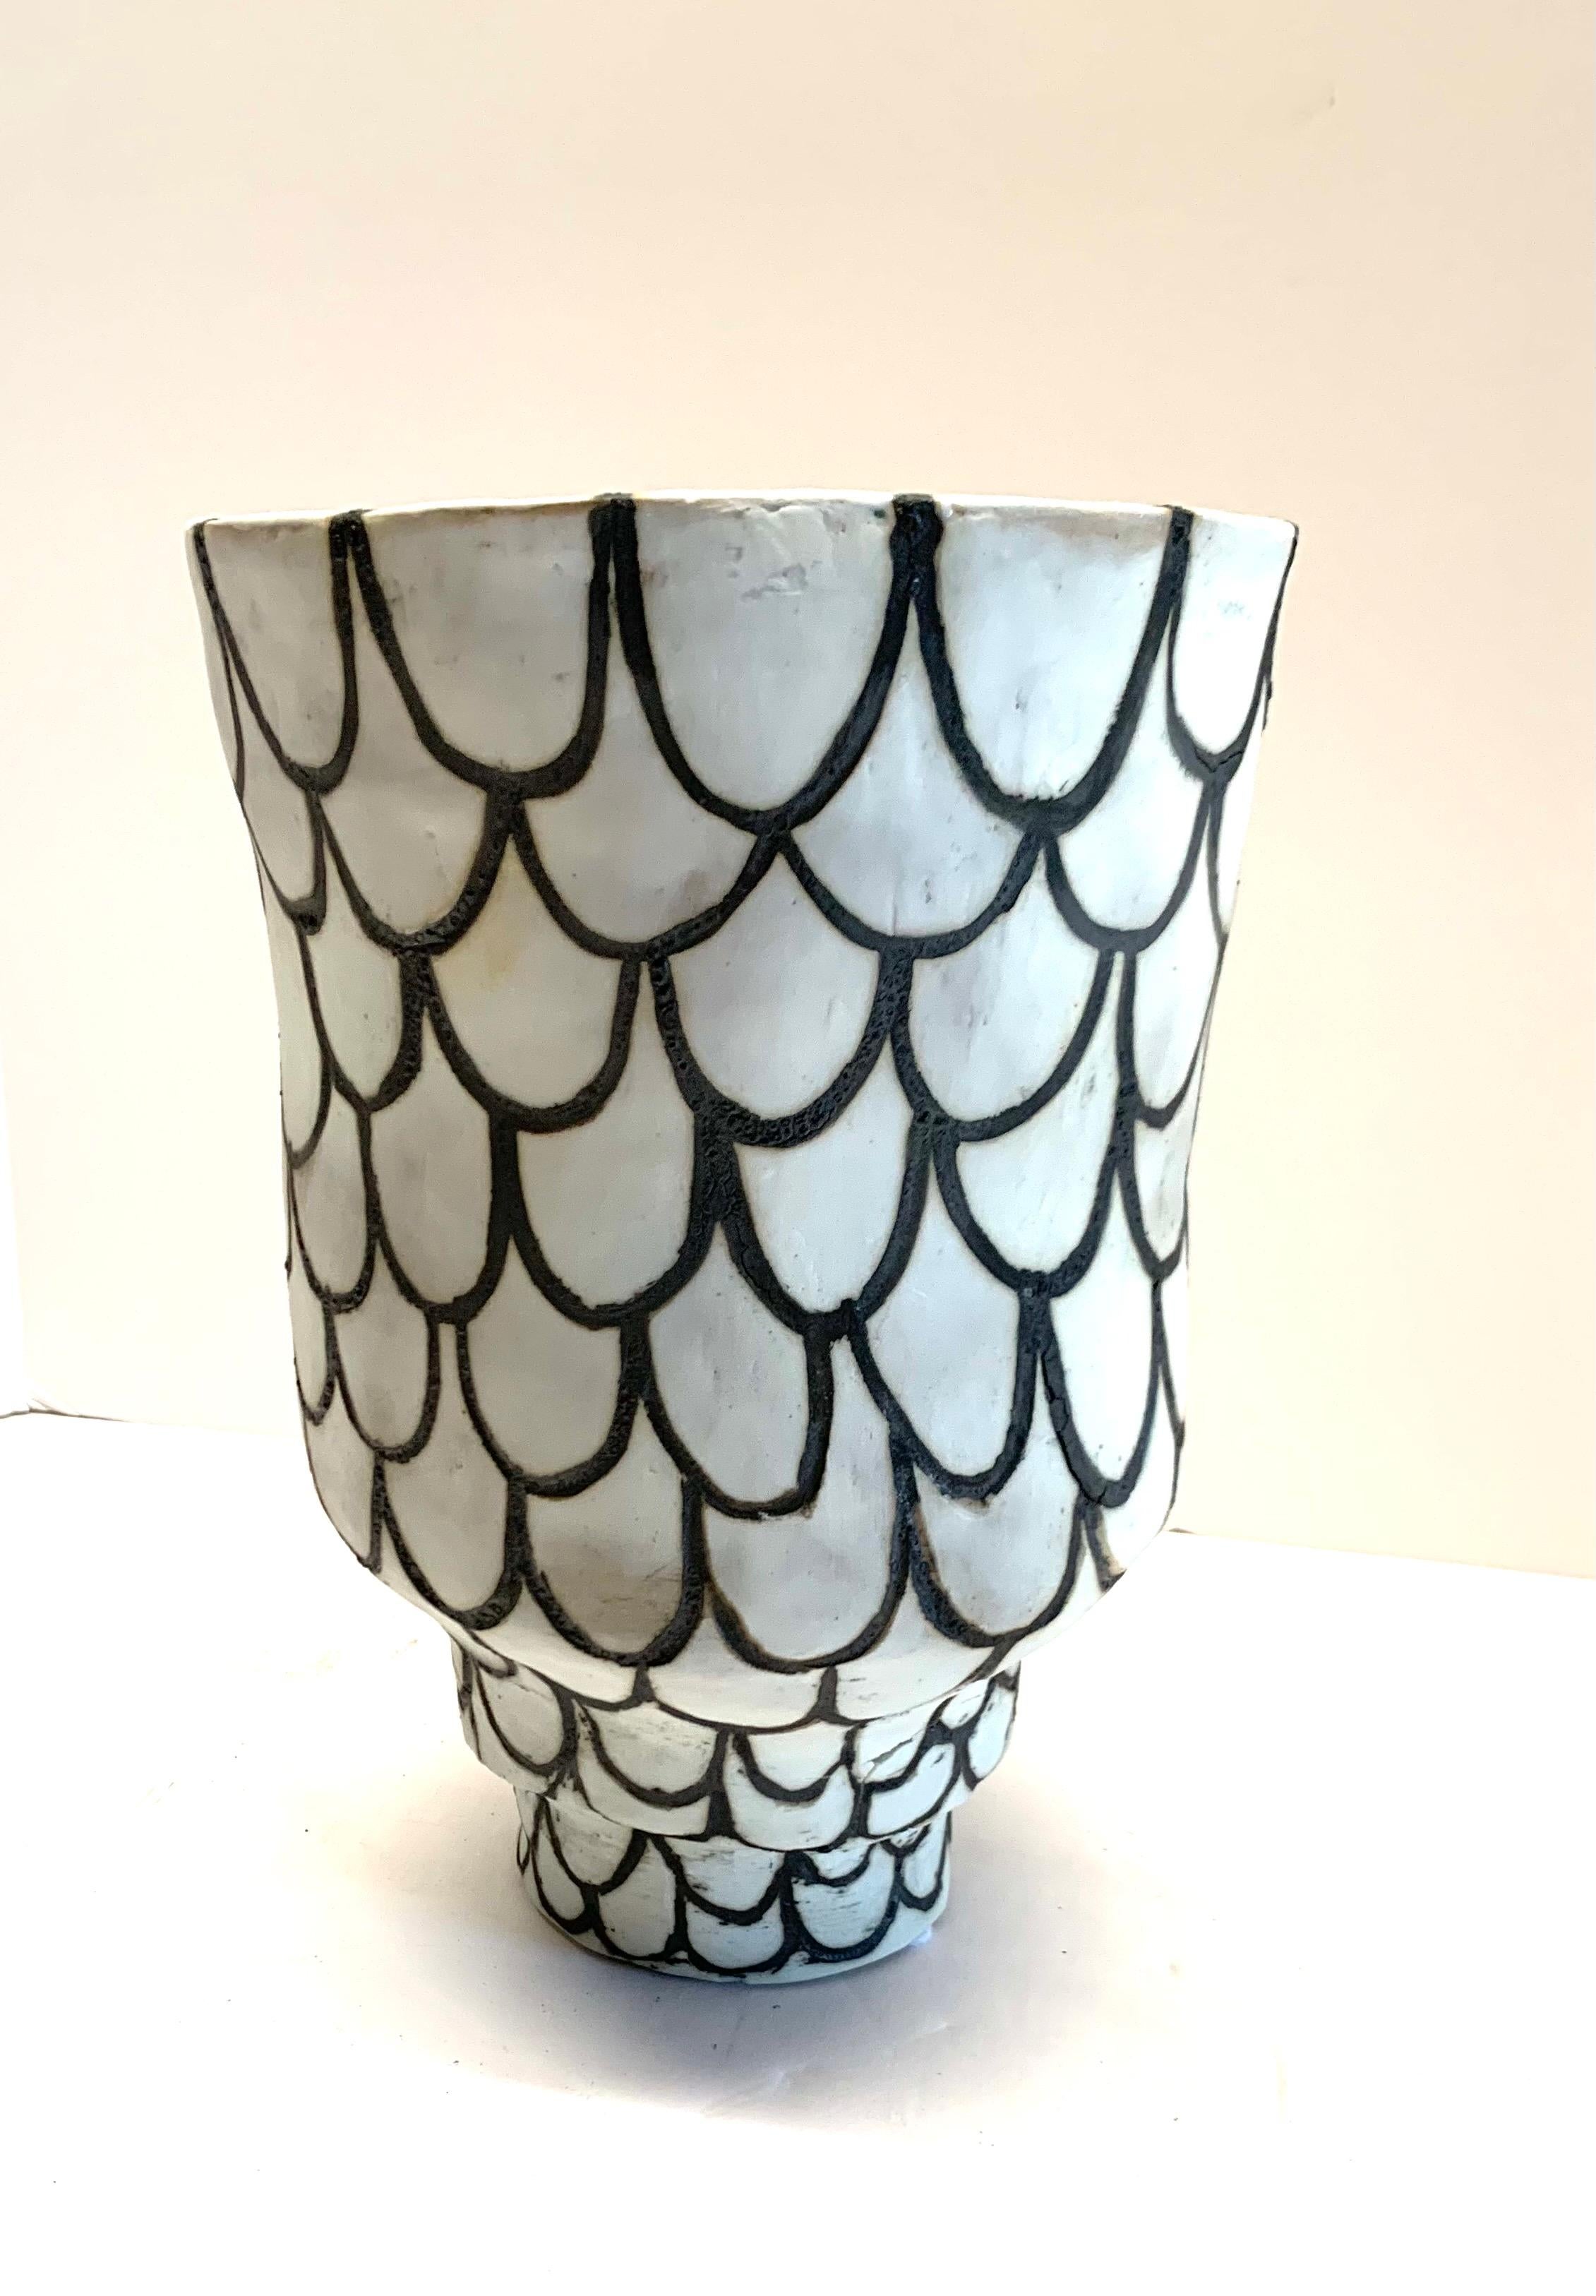 American Black & White Fish Scale Design Vase by Ceramicist Brenda Holzke, U.S.A